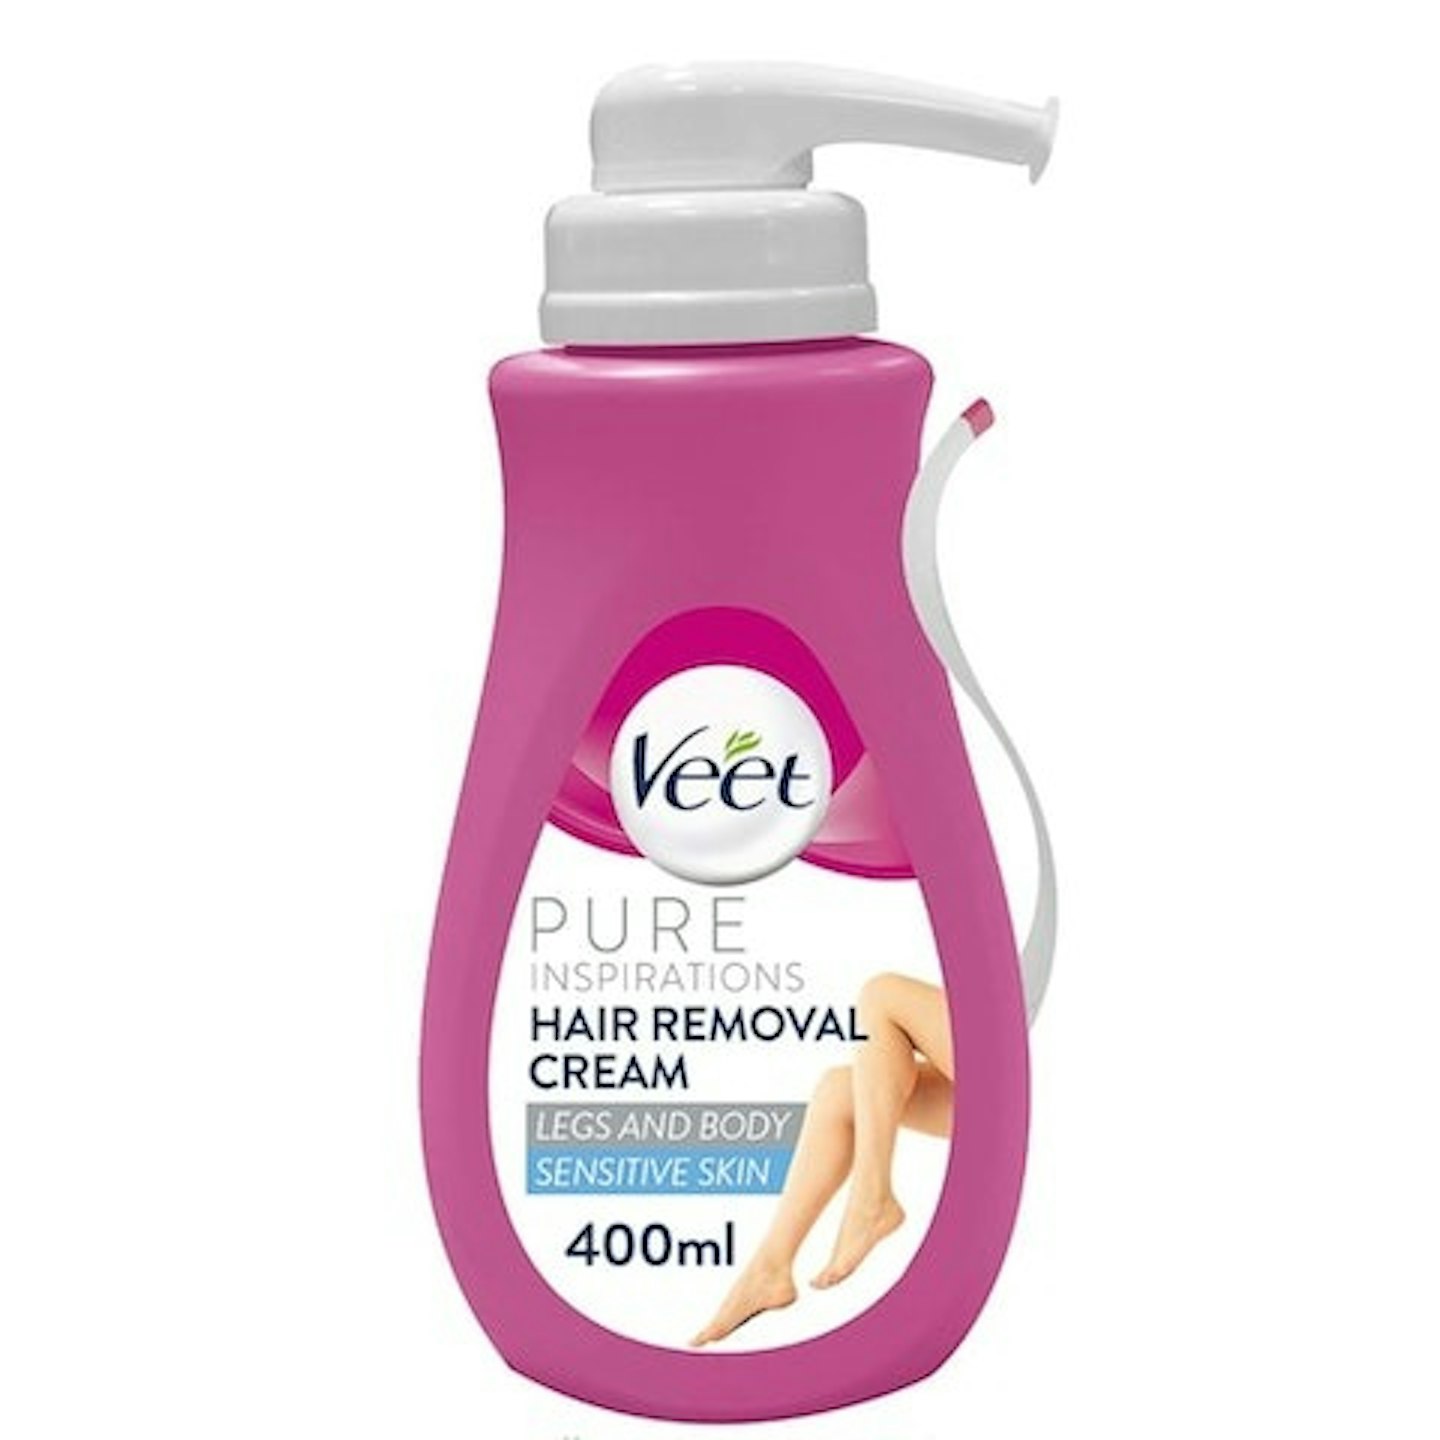 Veet Pure Hair Removal Cream, Legs & Body, Sensitive Skin, 400ml